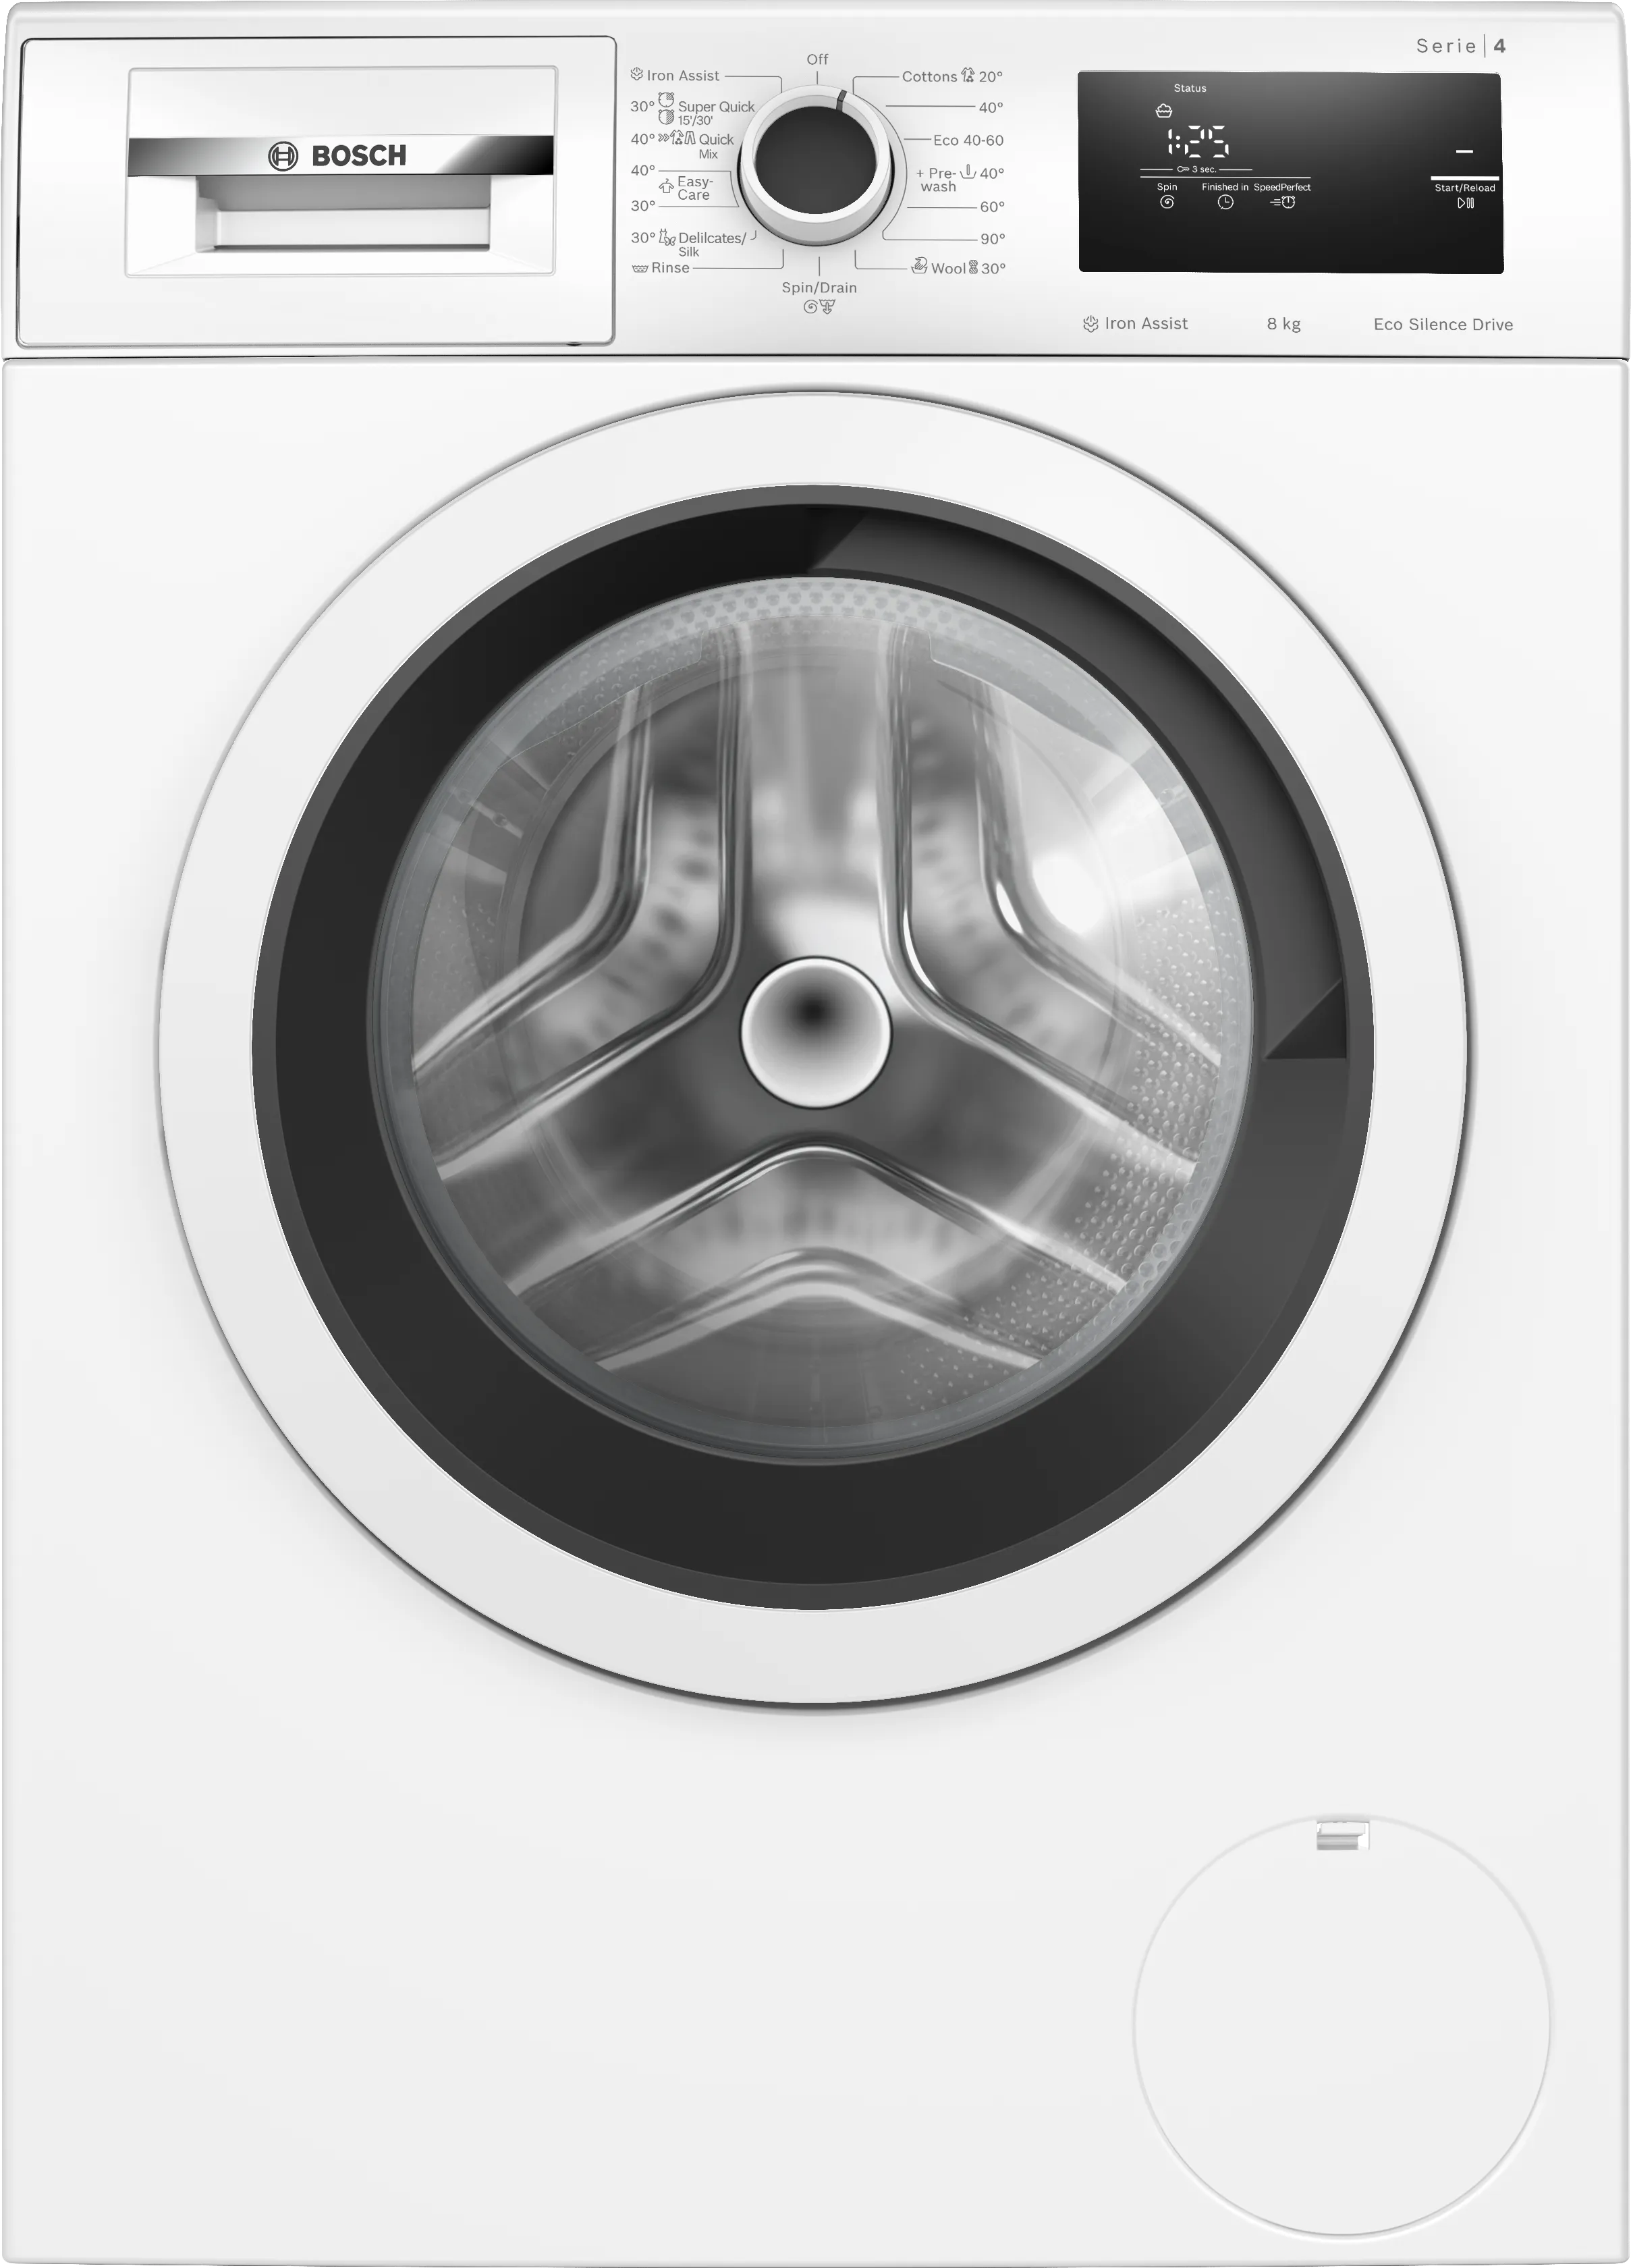 Serija 4 Mašina za pranje veša, punjenje spreda 8 kg 1200 okr 